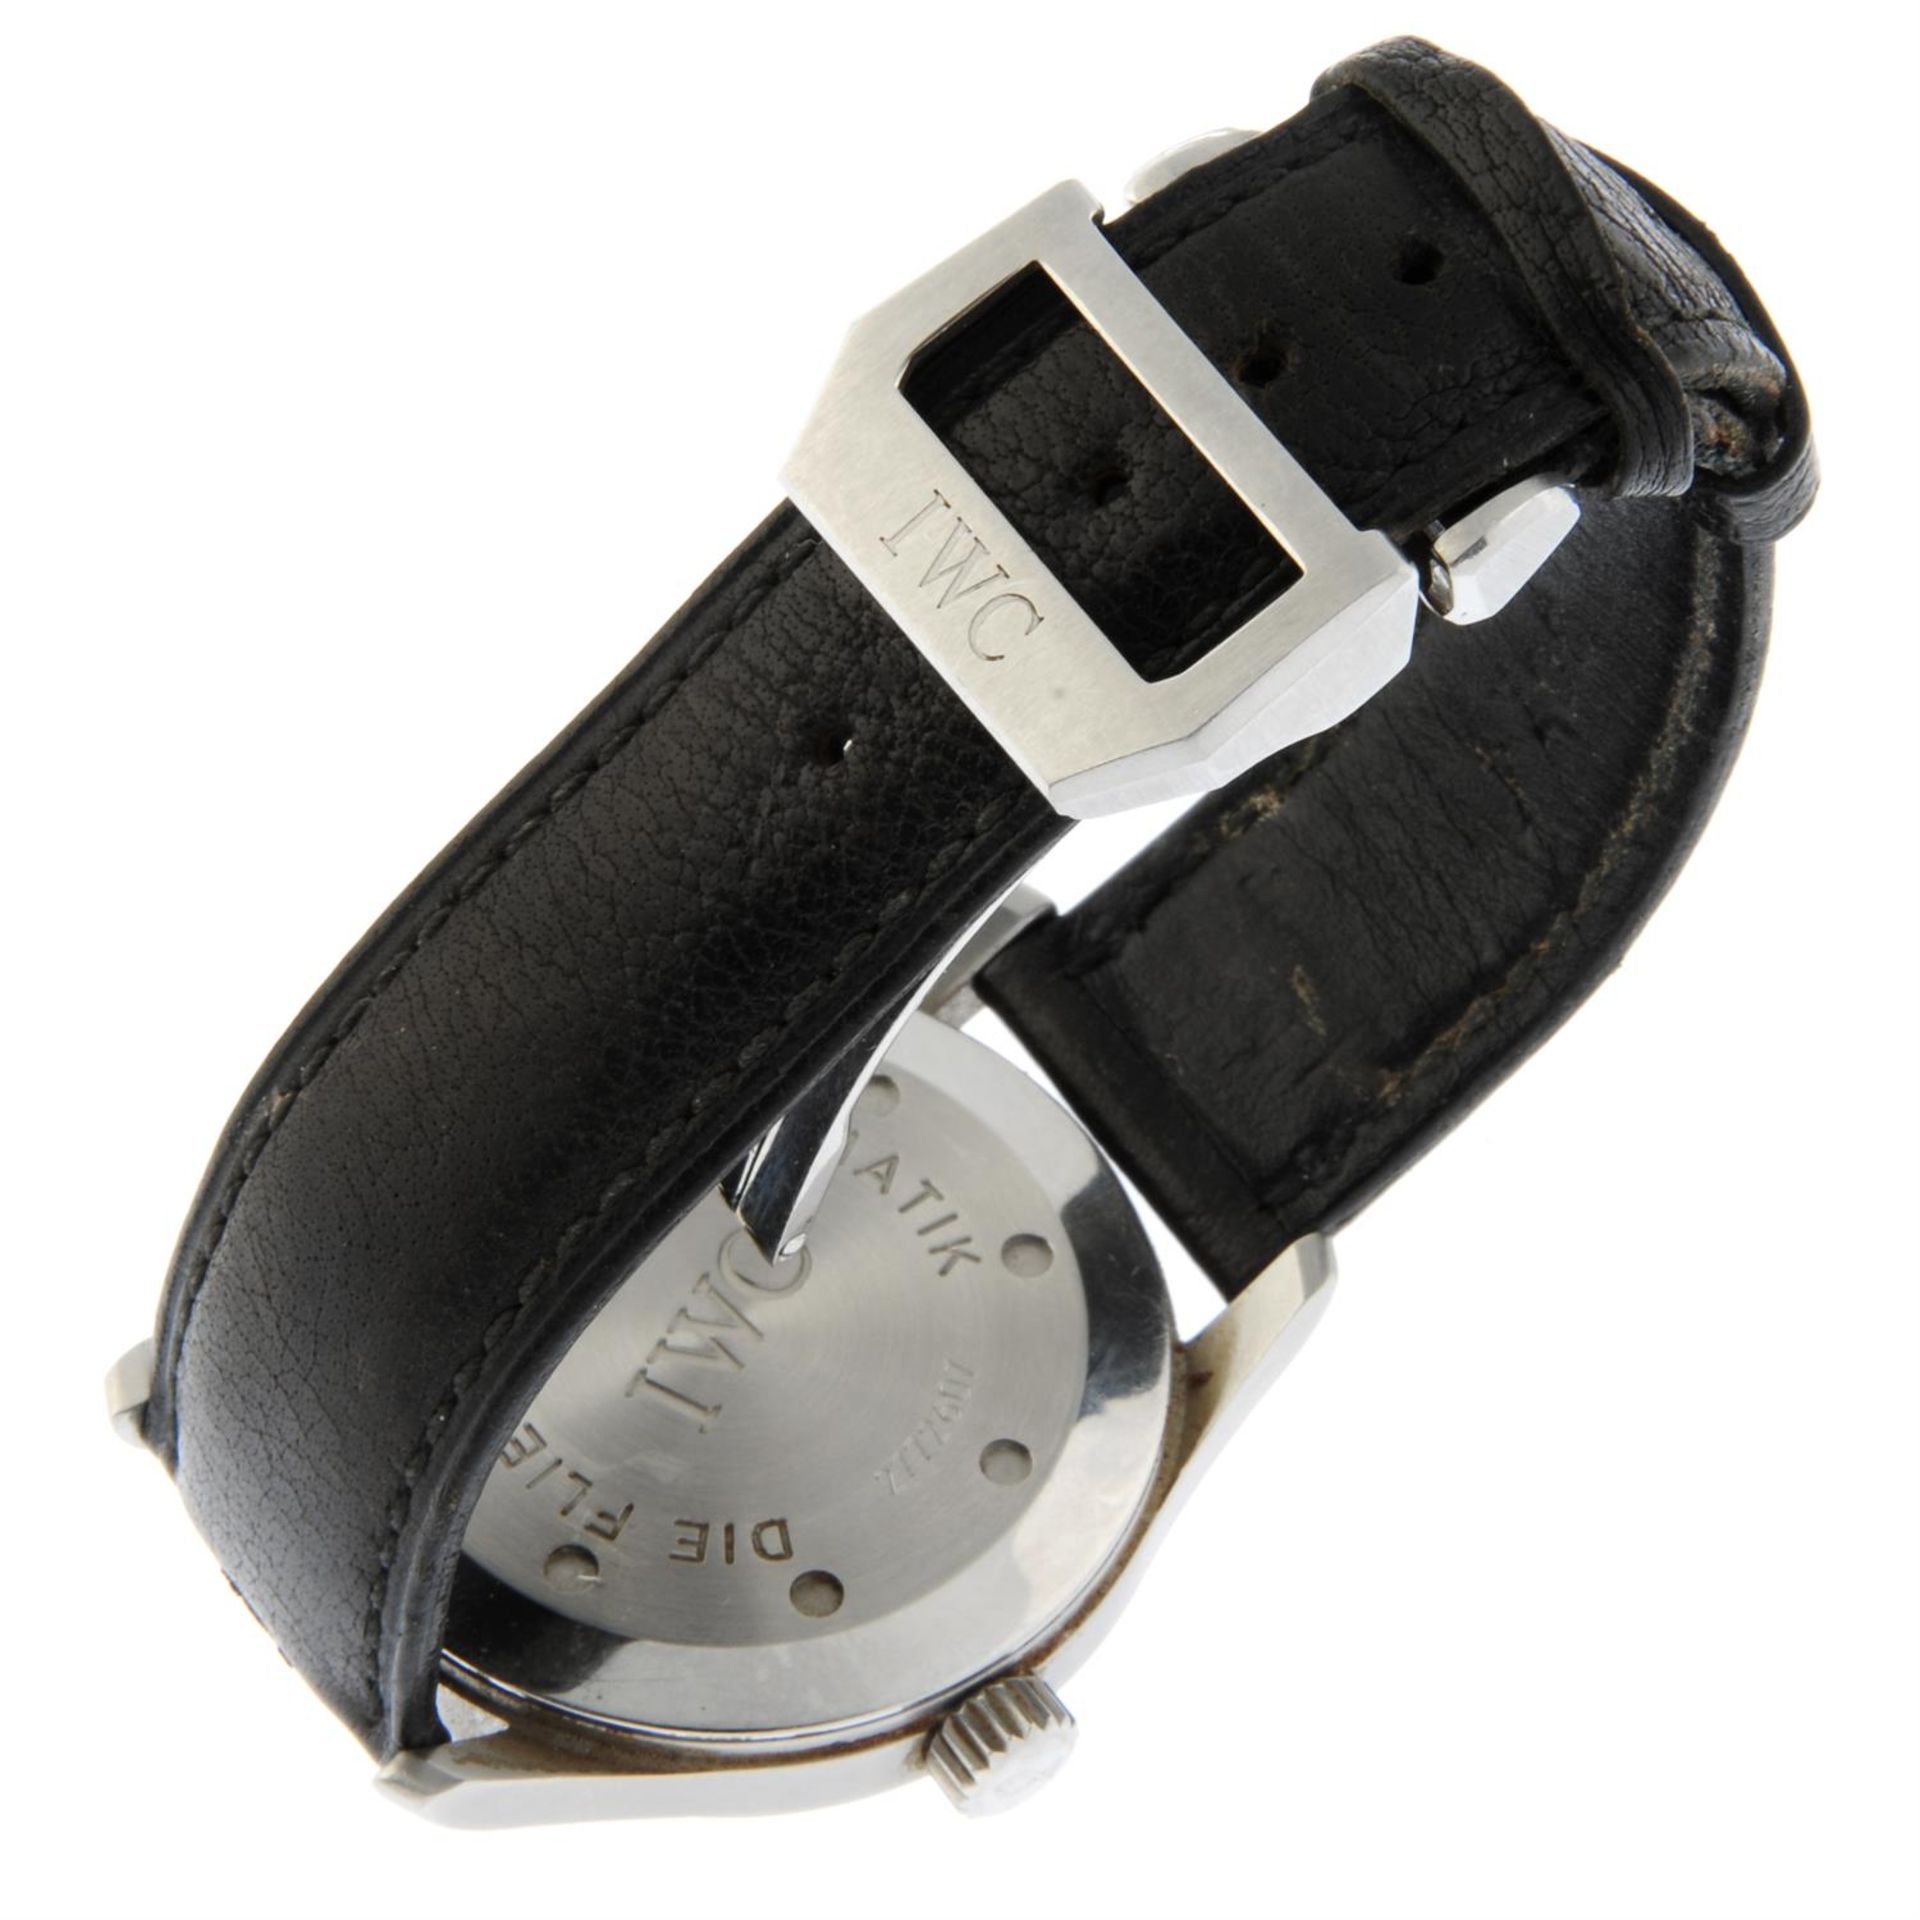 IWC - a Fliegeruhr Mark XV watch, 38mm. - Image 2 of 5